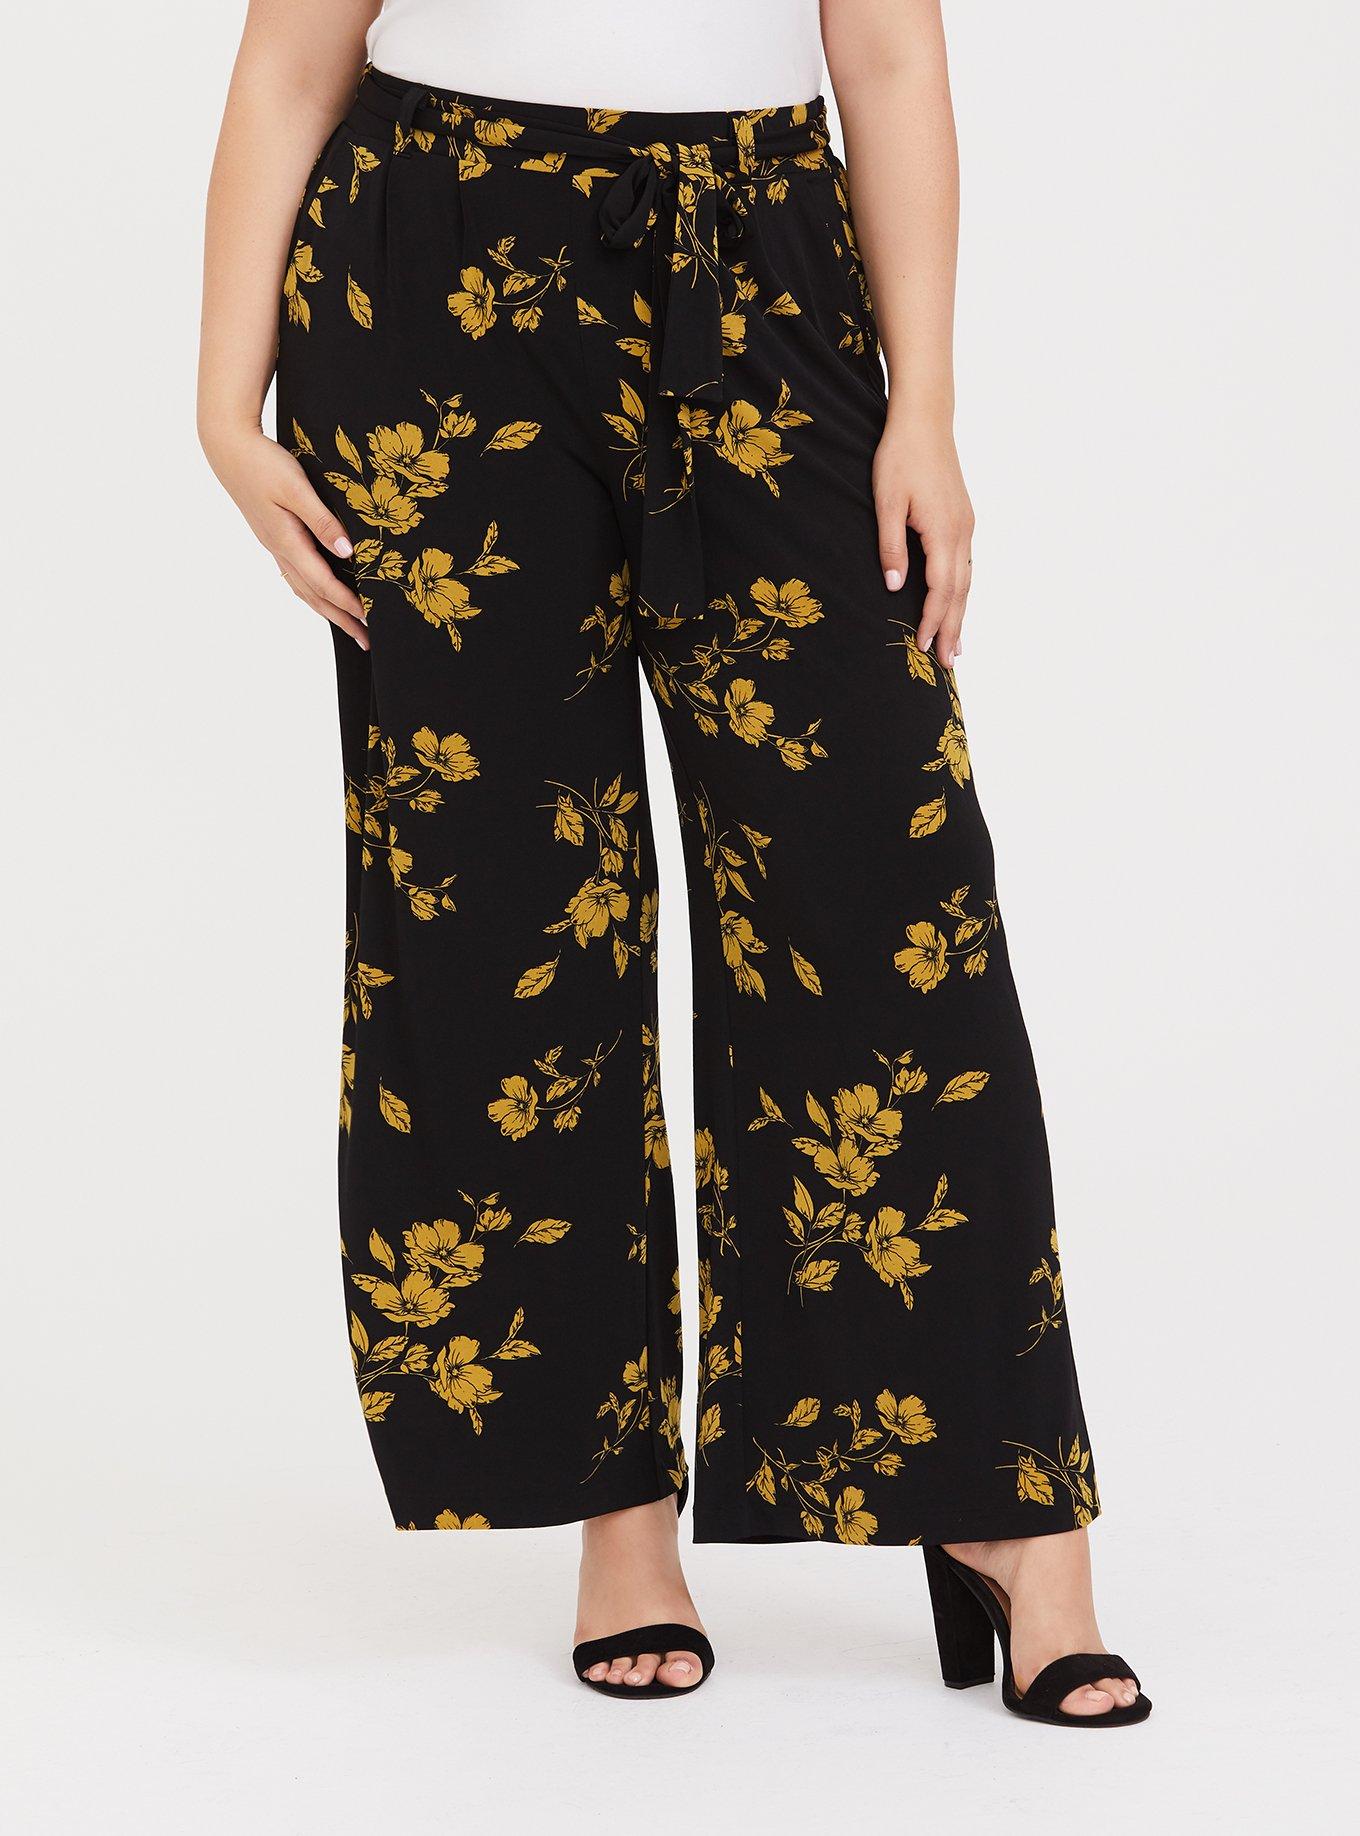 Plus Size - Black & Yellow Floral Studio Knit Wide Leg Pant - Torrid